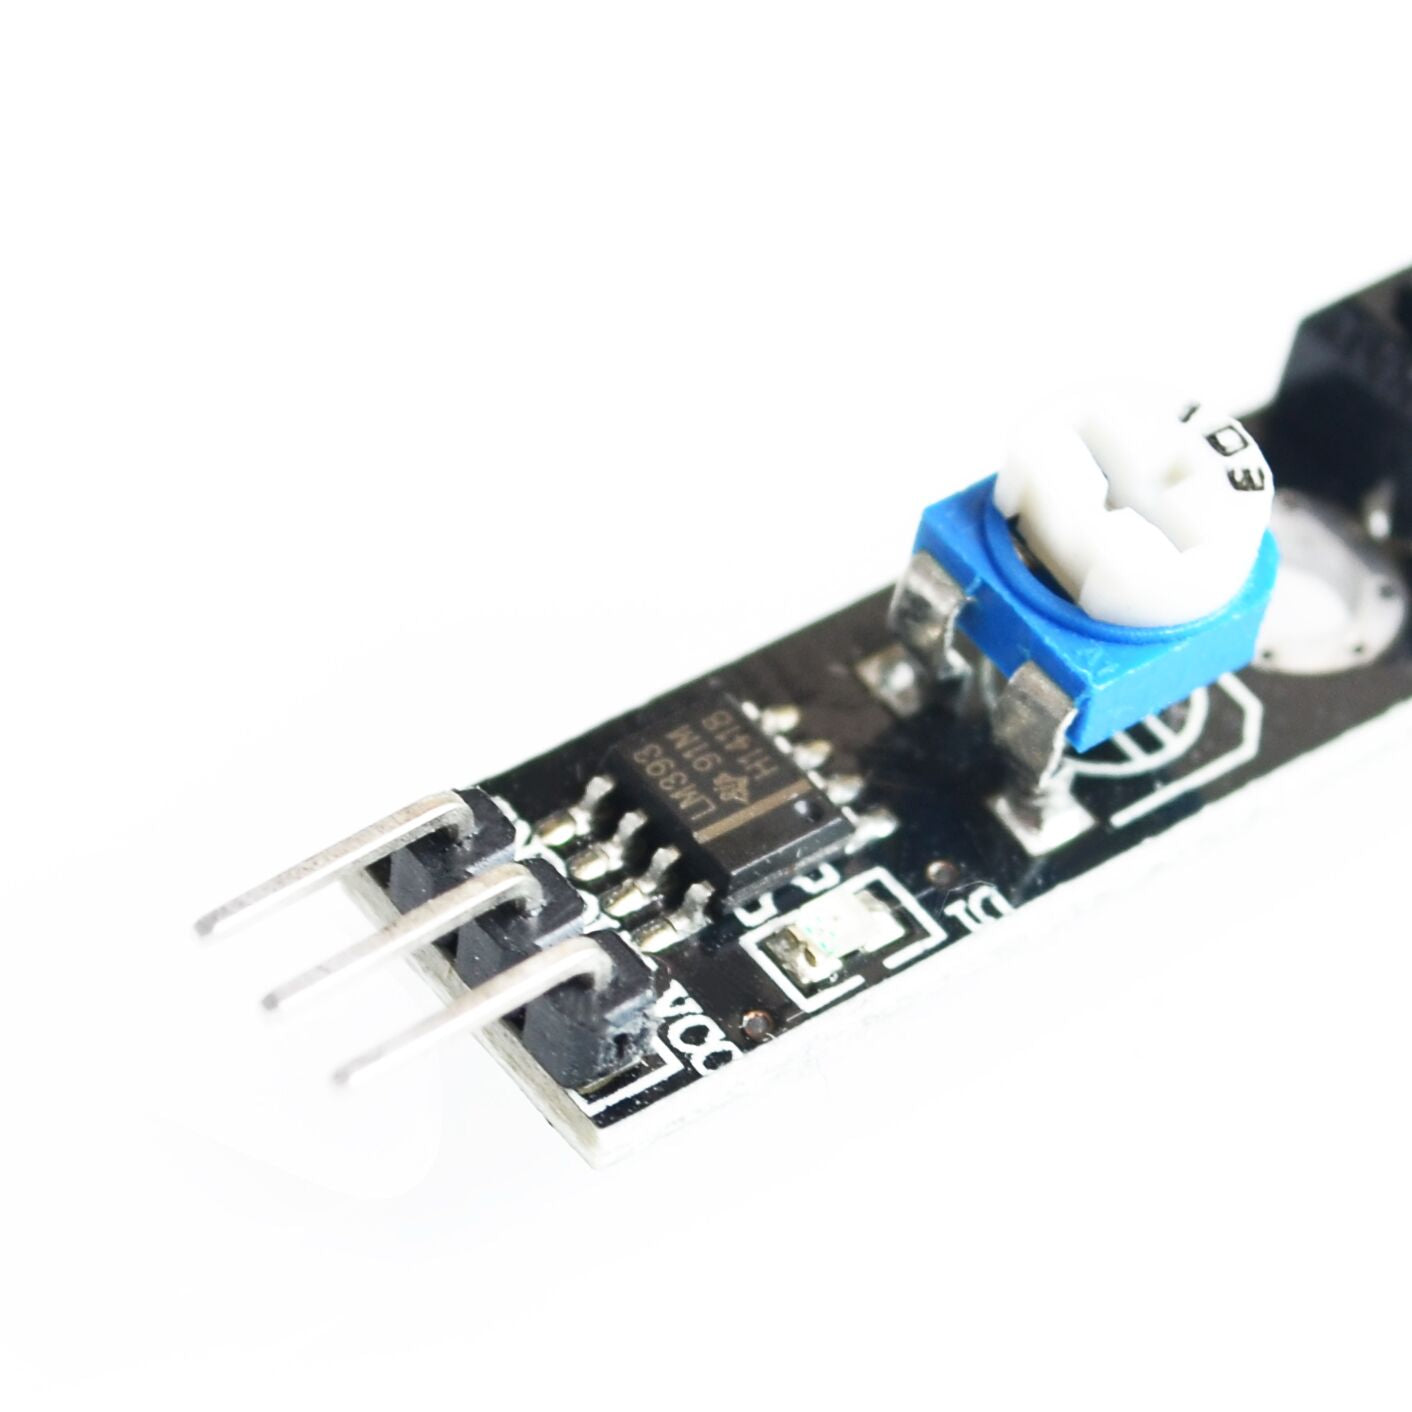 Line Tracking Sensor Module for Arduino TCRT5000 LM393